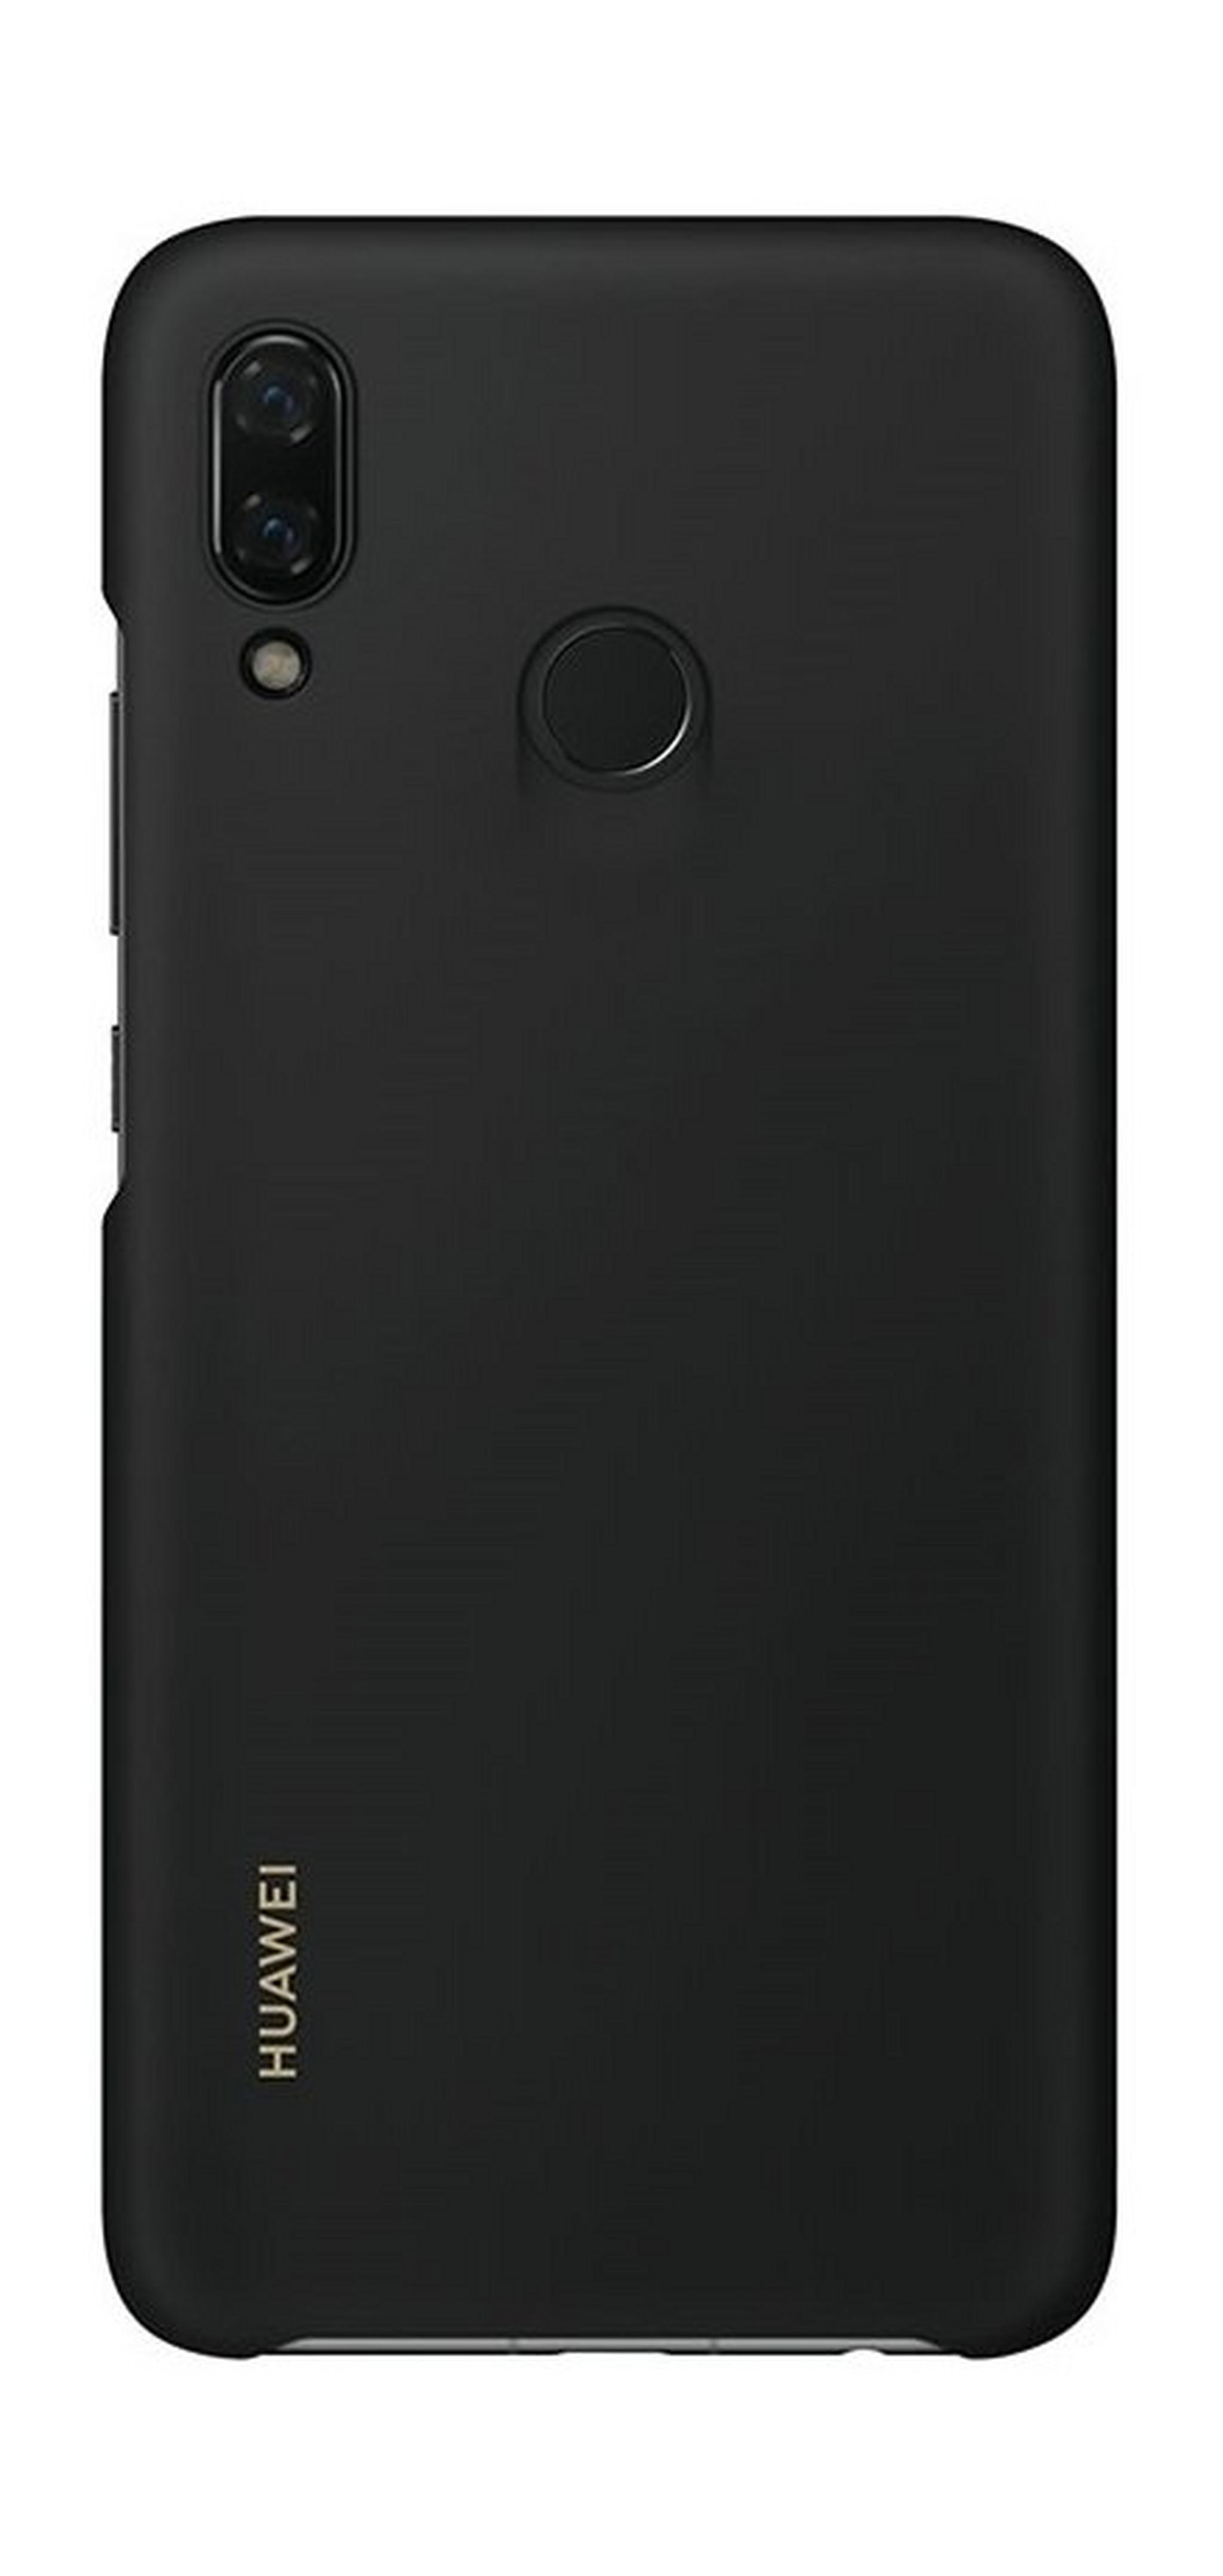 Huawei Nova 3 Protective Back Case (51992583) - Black